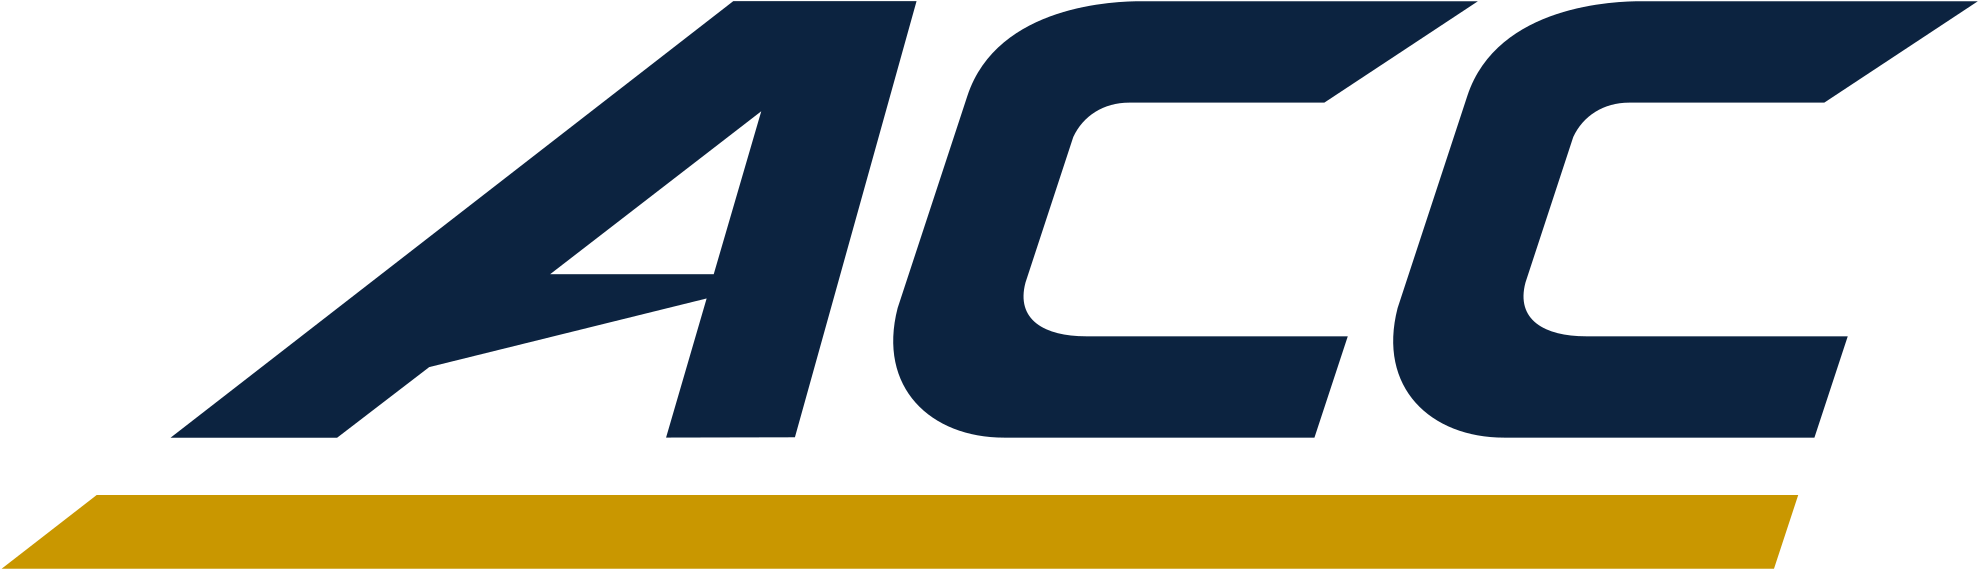 Open - Boston College Acc Logo (2000x590)